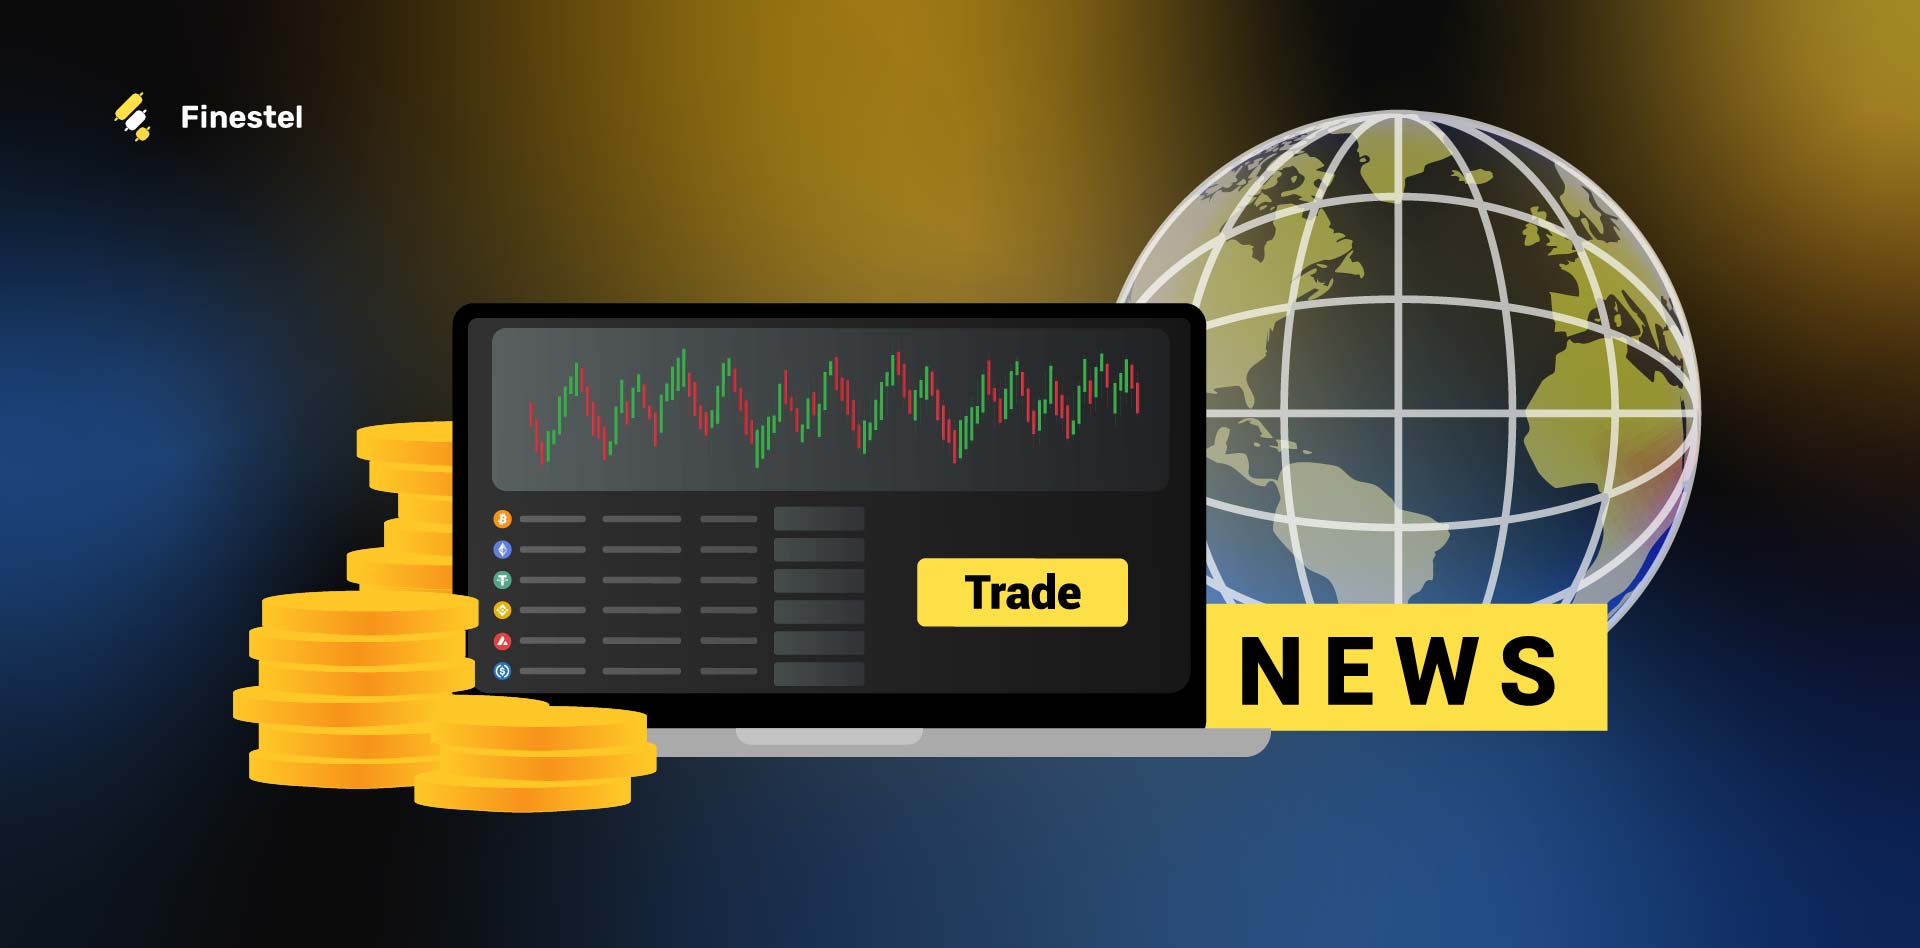 News-Based Trading